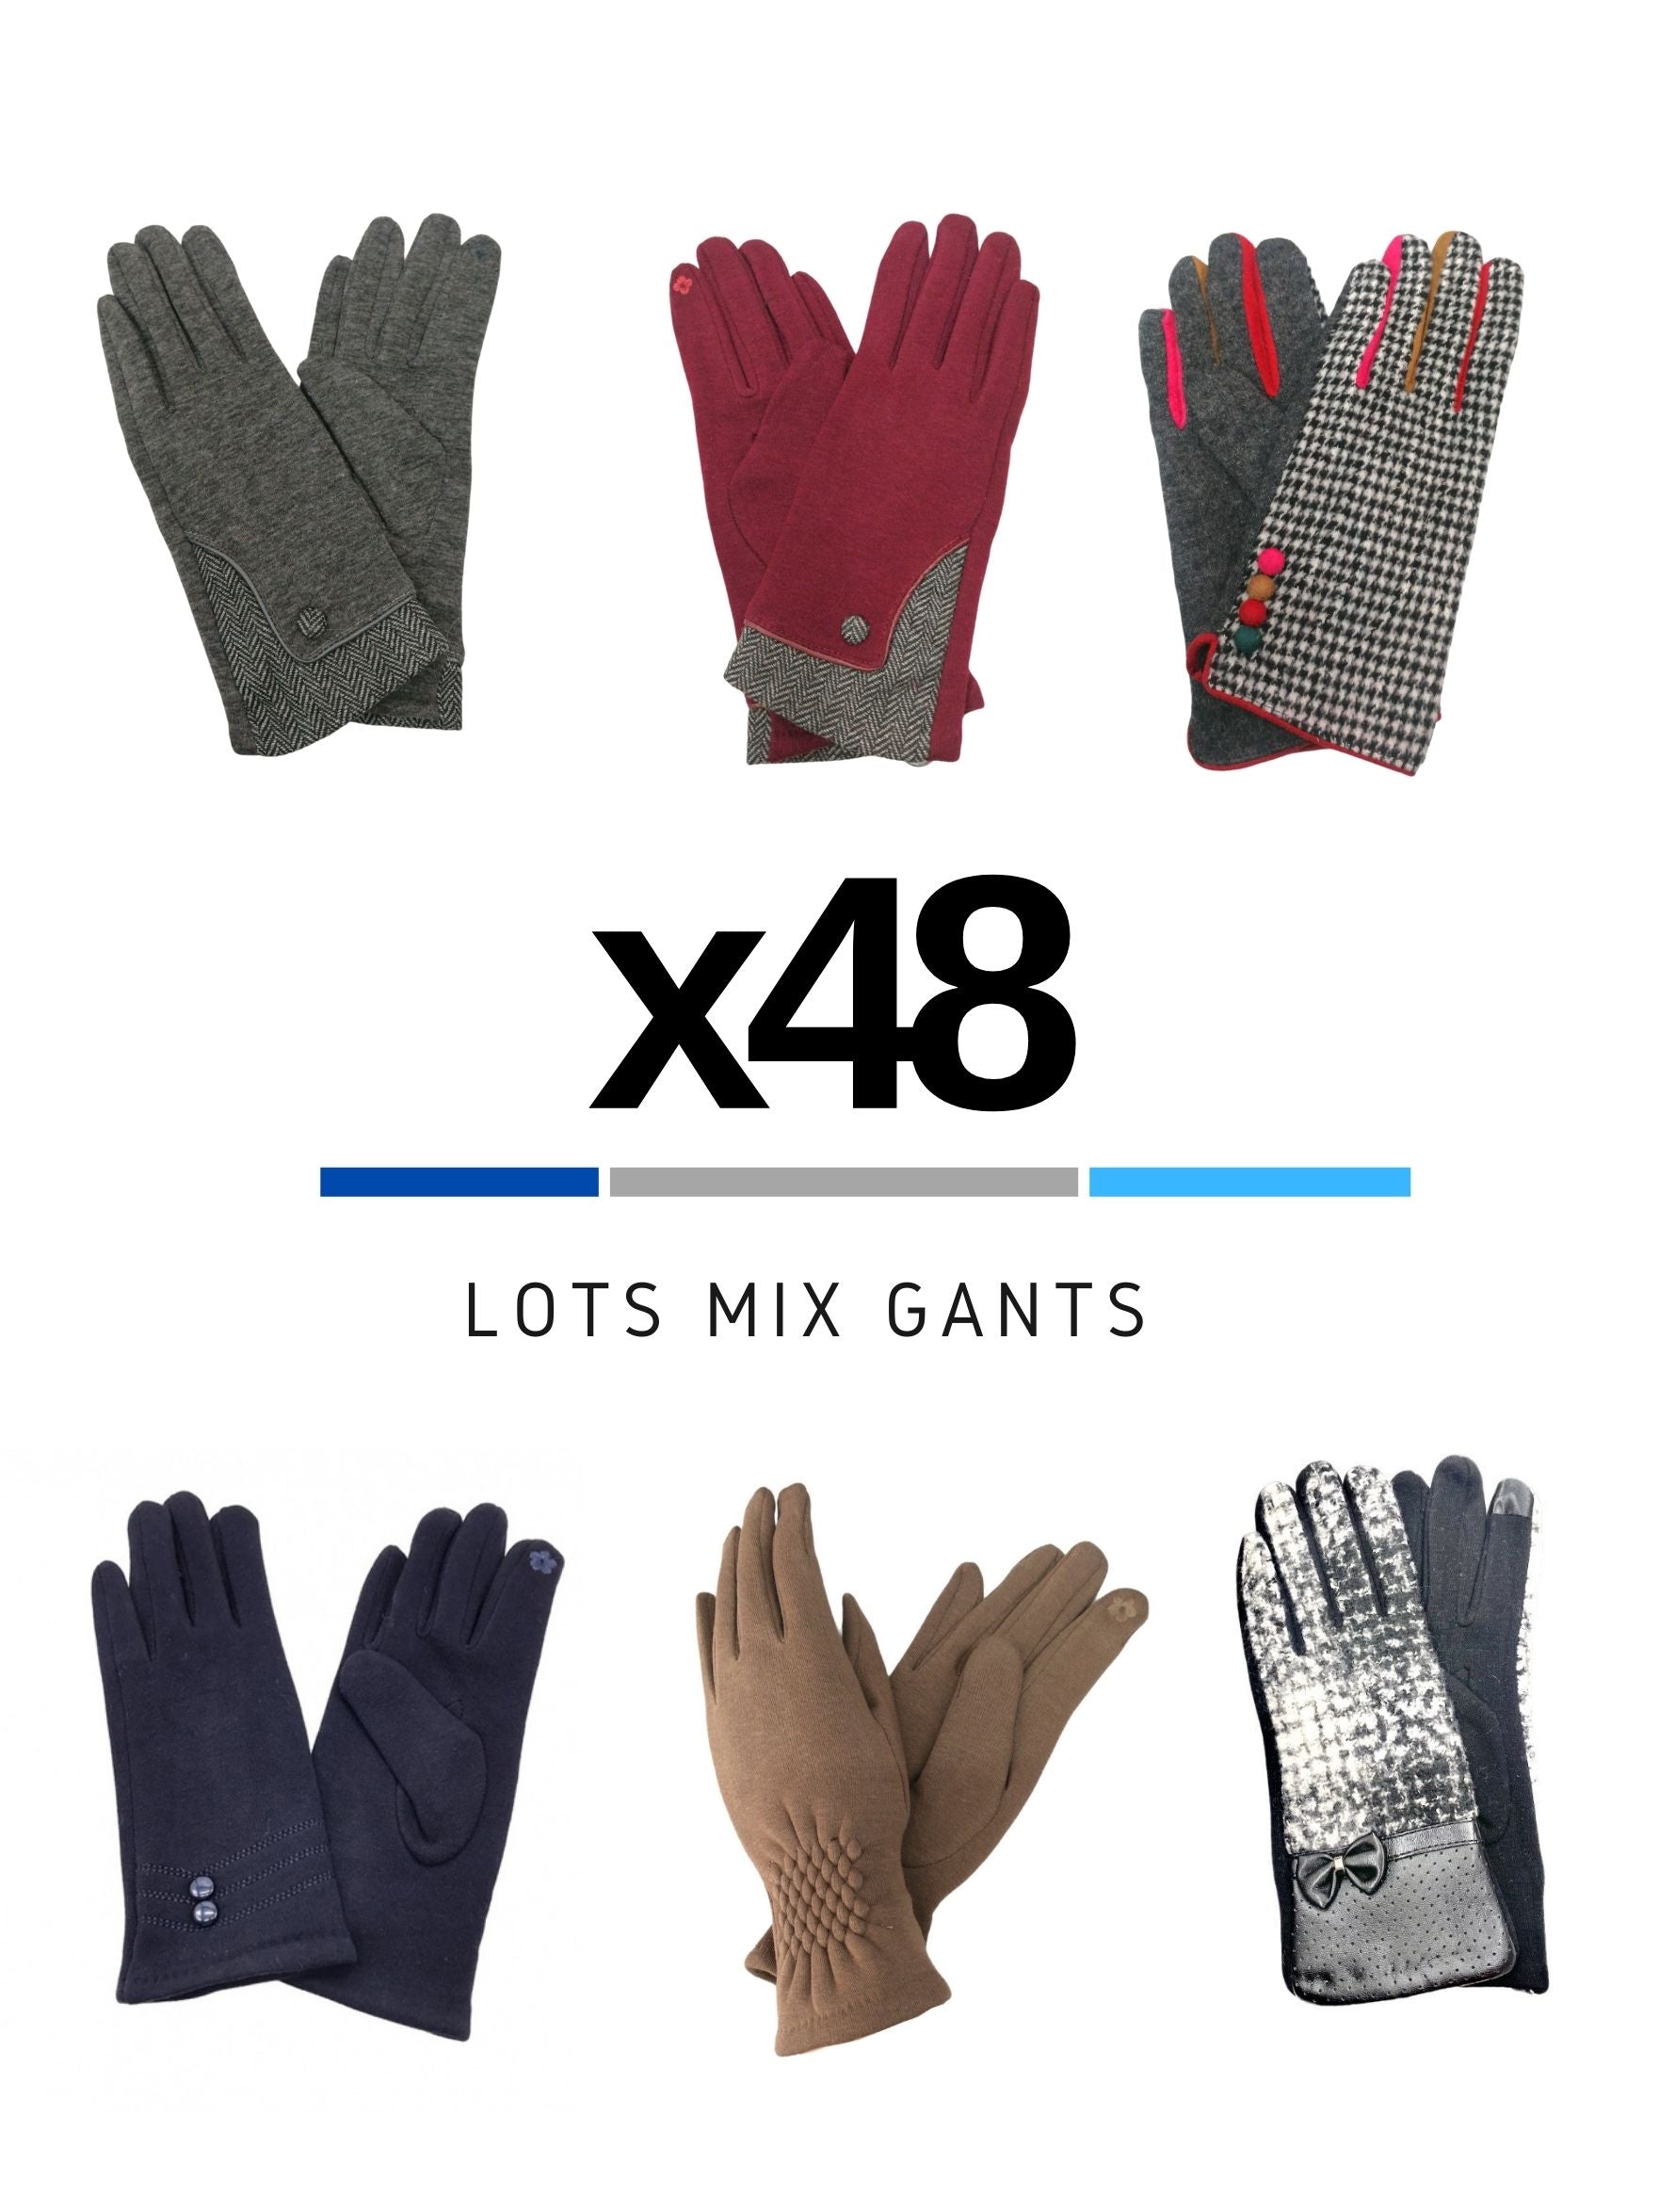 MAXI-LOT Mix gants mélangés (x48)